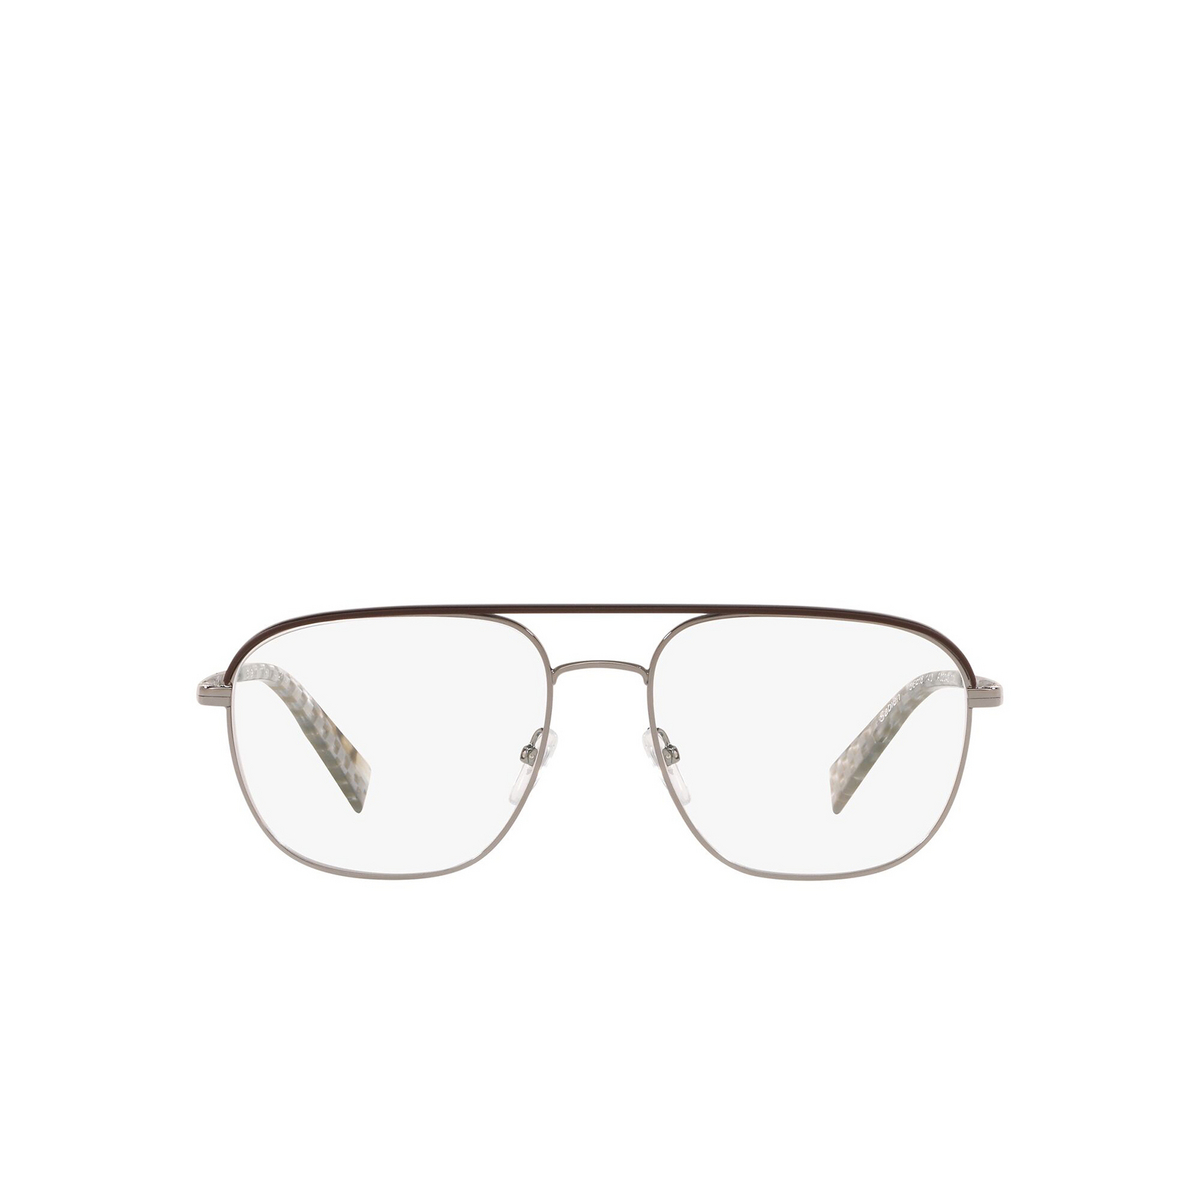 Alain Mikli® Aviator Eyeglasses: Sabien A02042 color Gunmetal / Matte Brown 002 - front view.